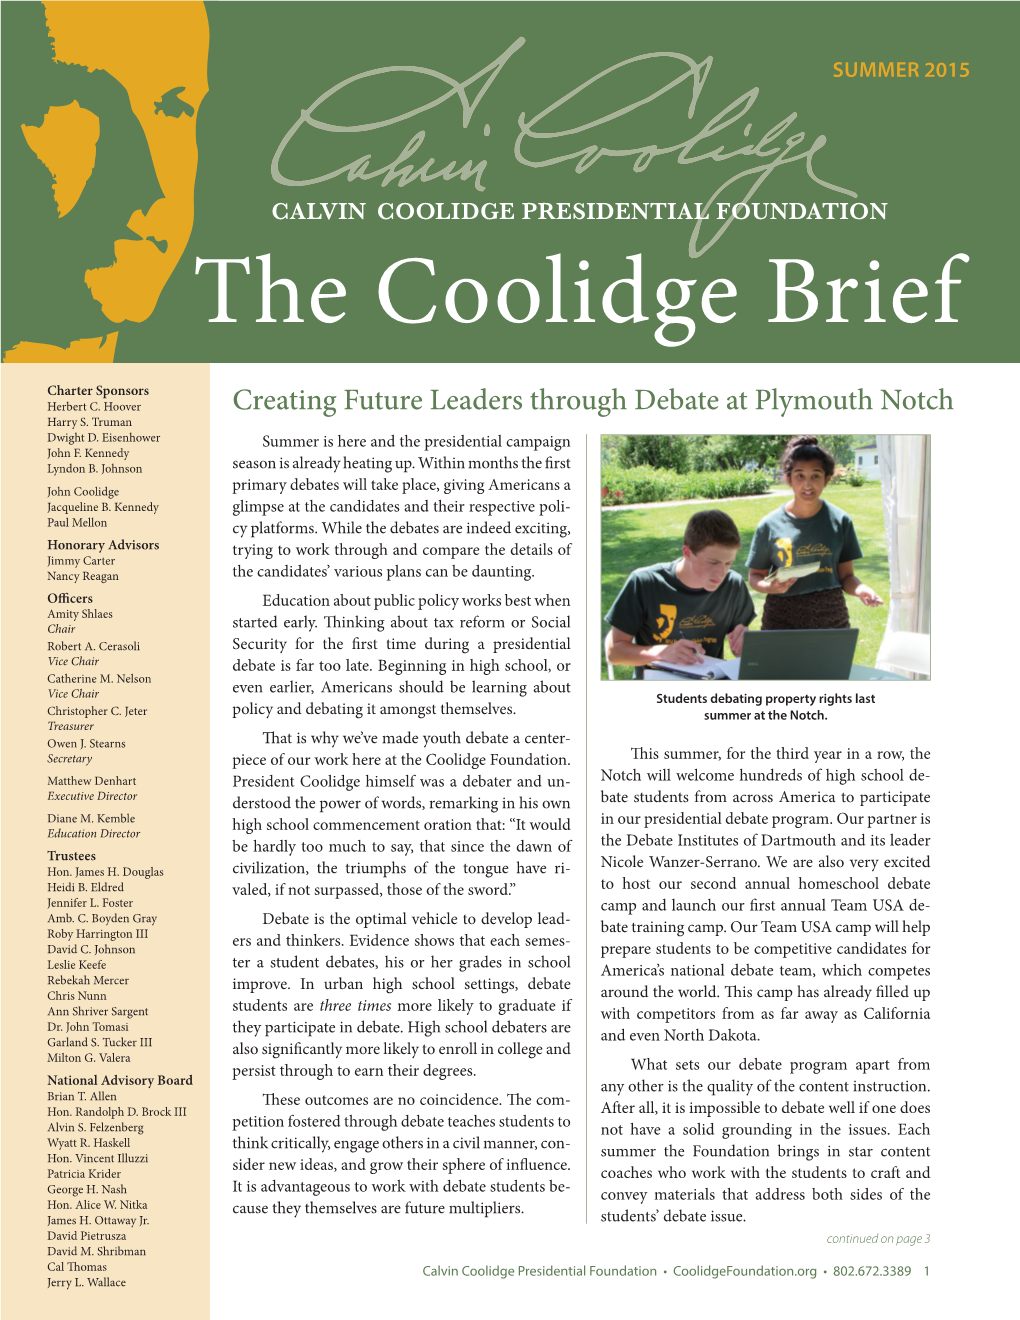 The Coolidge Brief